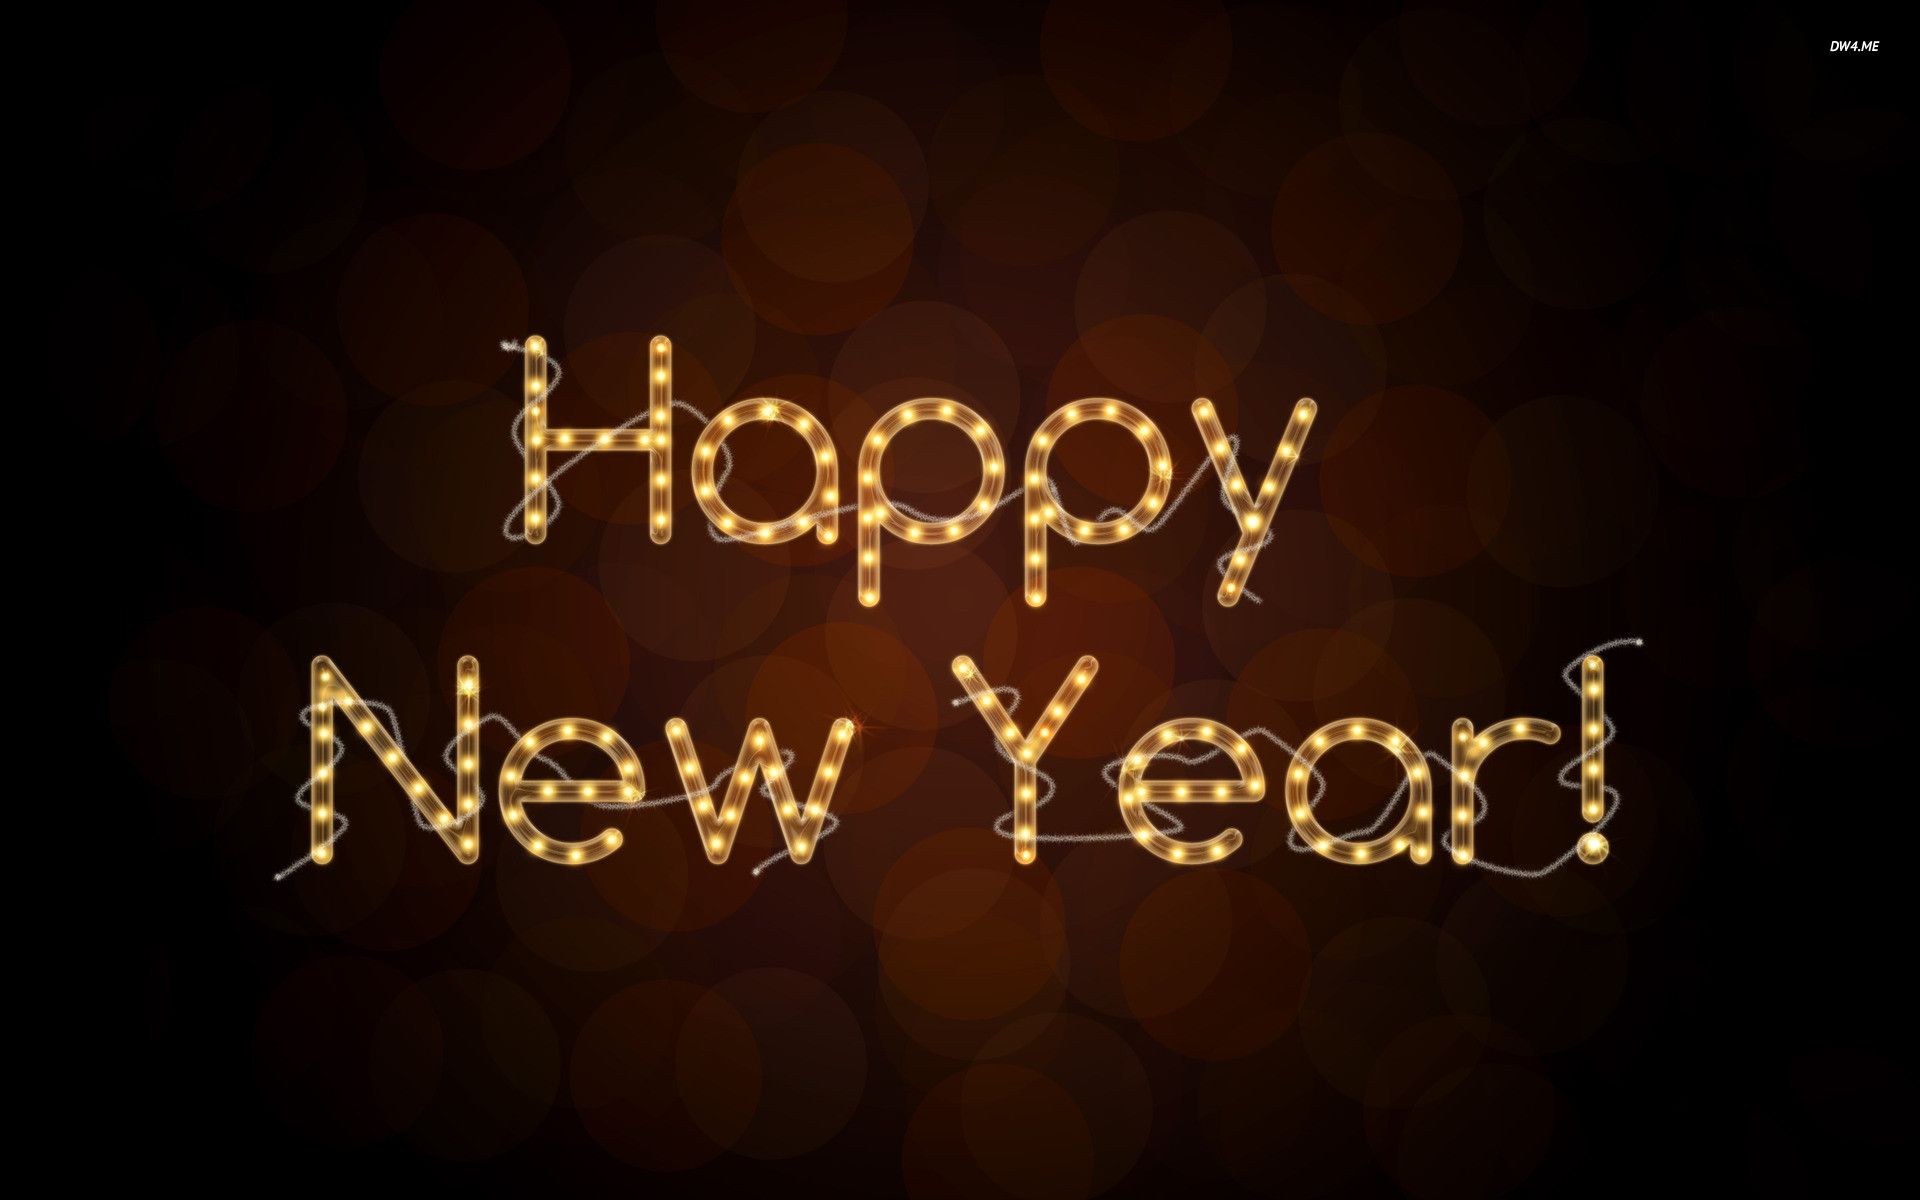 happy new year full HD image HD wallpaper download free background wallpaper. Happy new year wallpaper, New year wishes image, Happy new year image